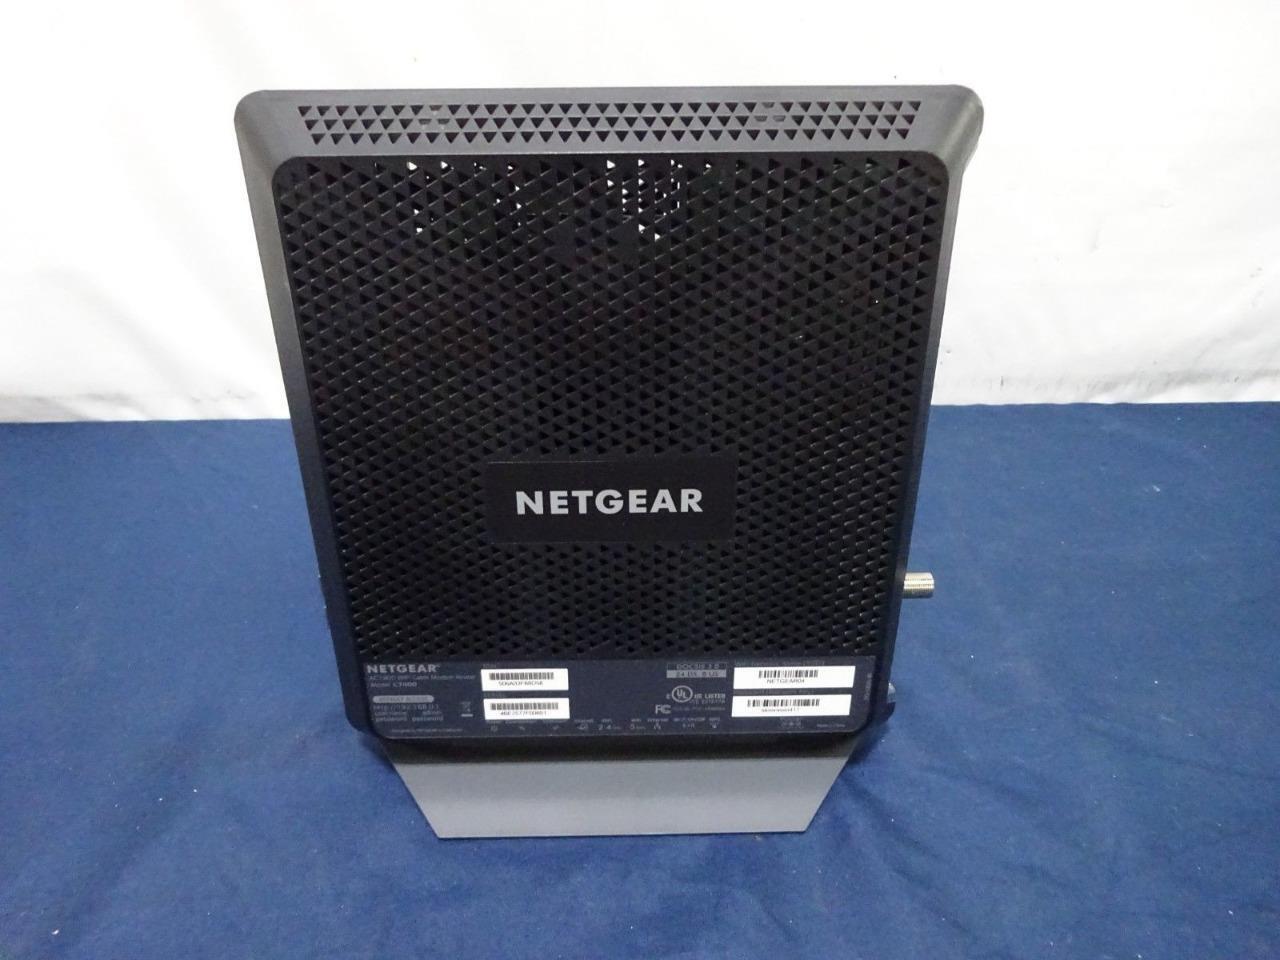 Netgear Nighthawk AC1900 Wifi Cable Modem Router C7000